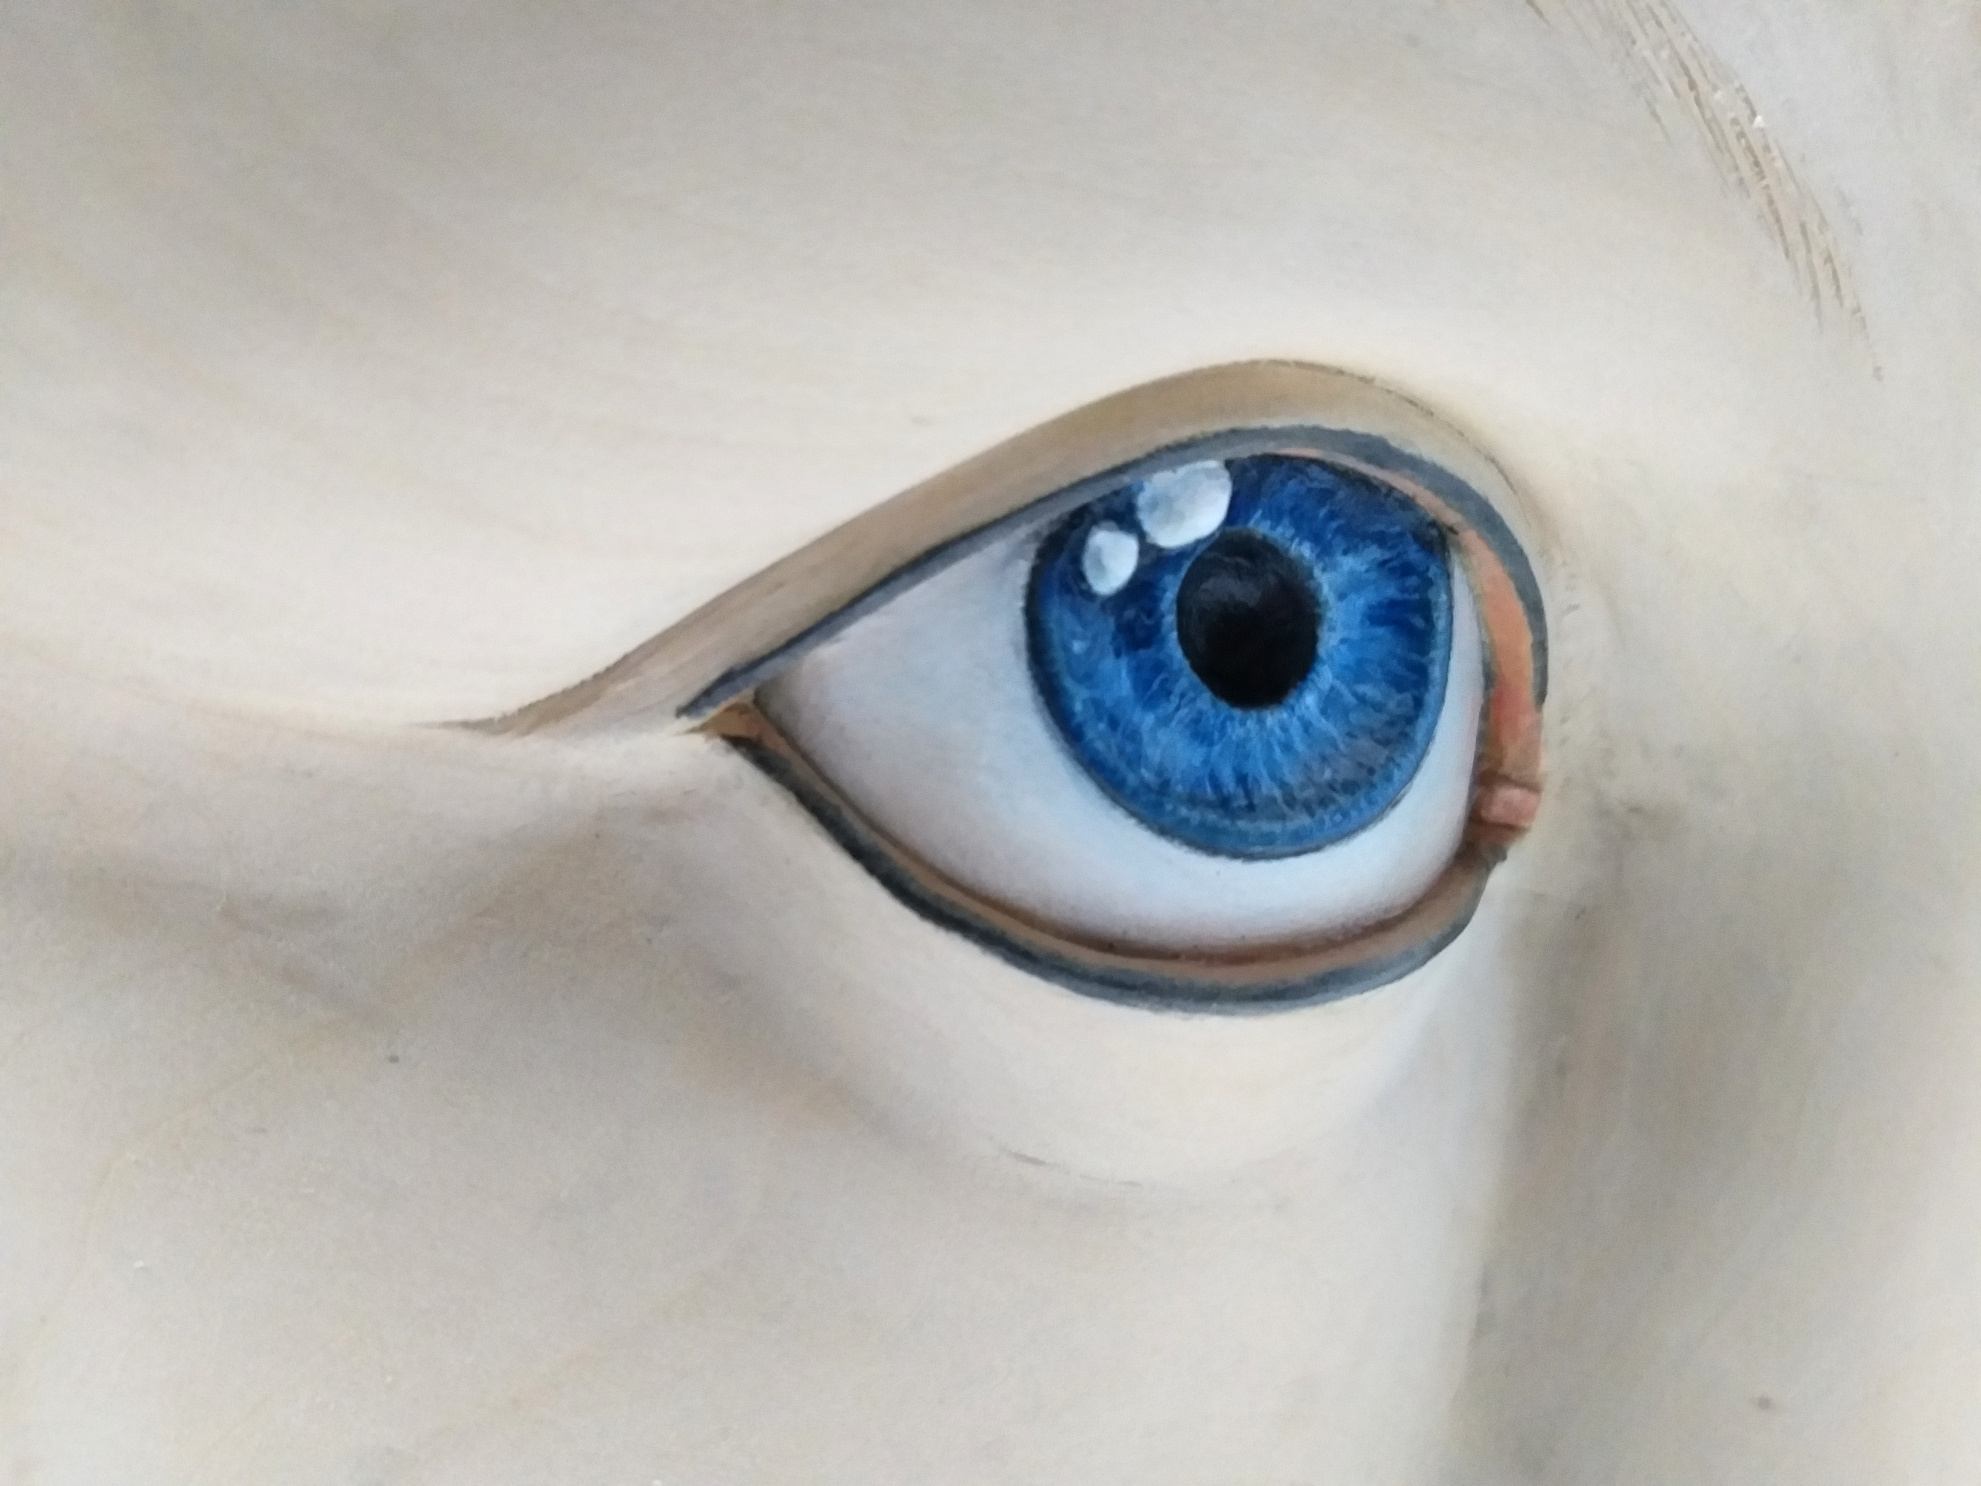 Wood Carving A Human Eyes